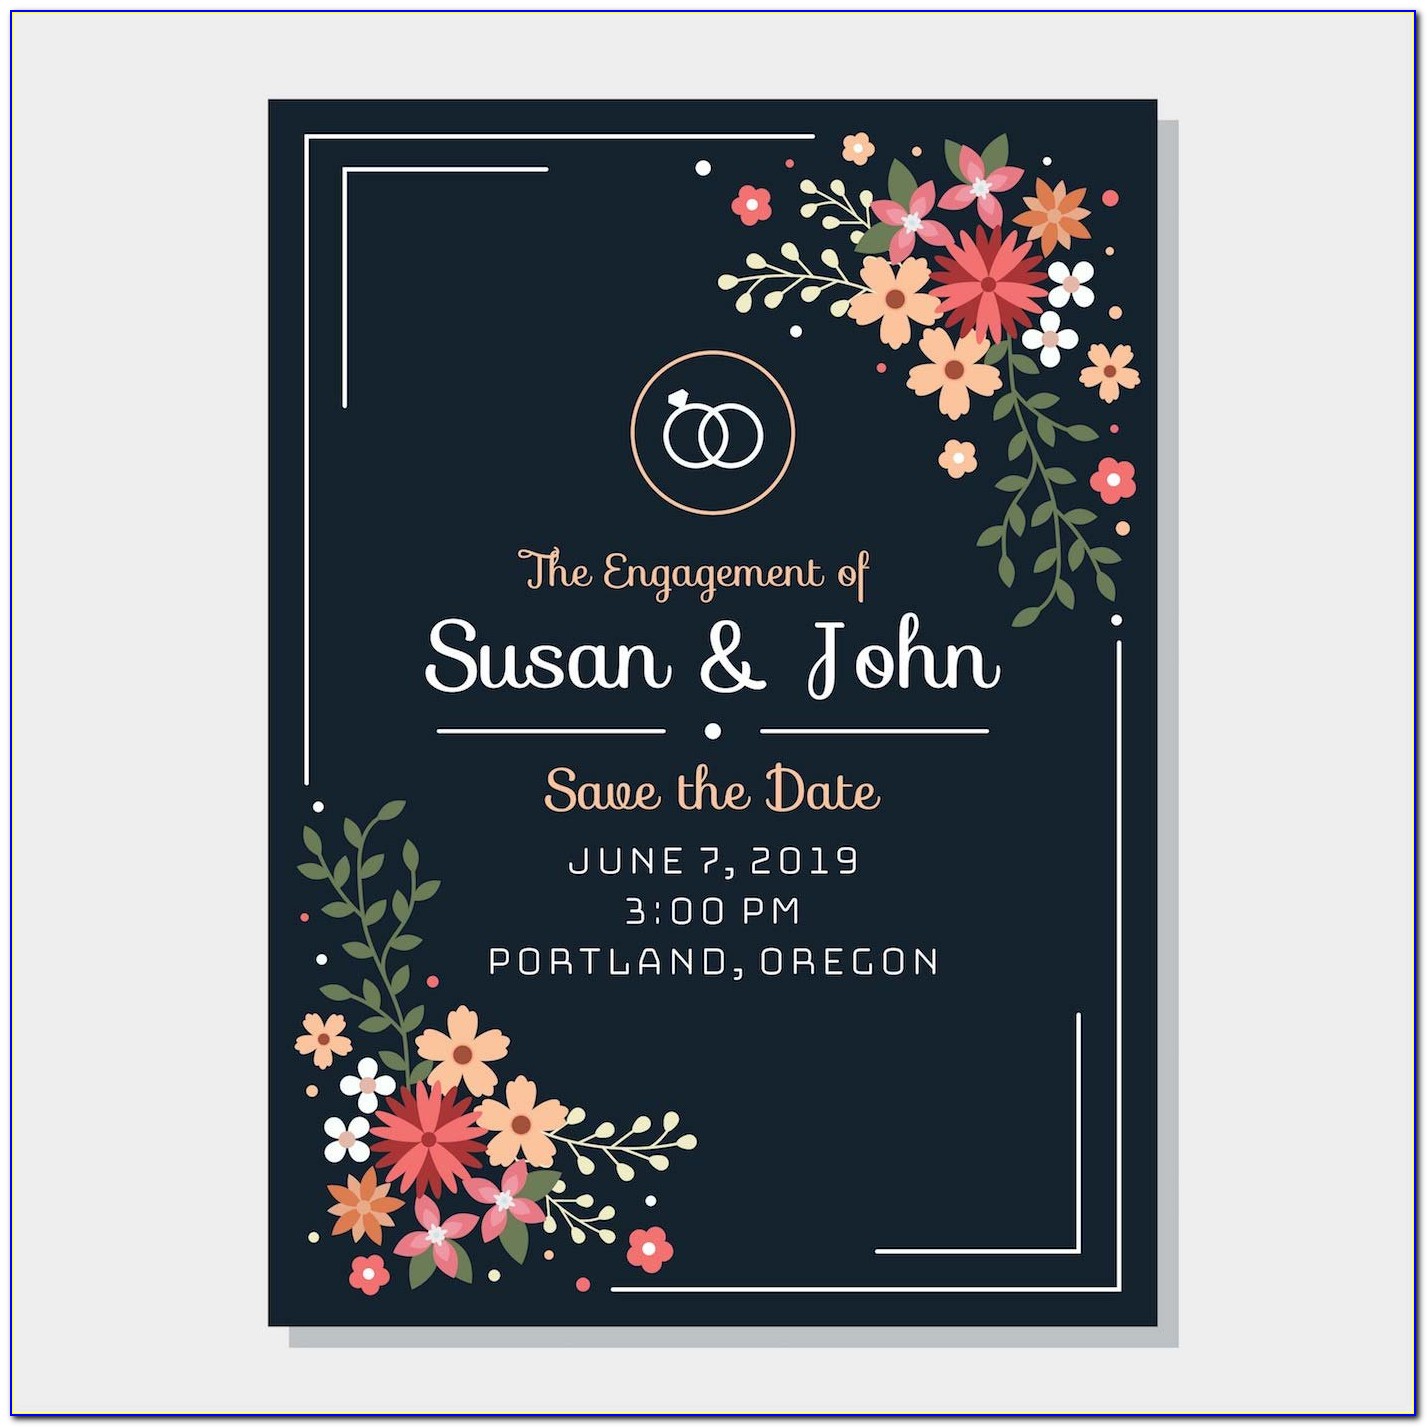 Wedding Invitation Card Editor Software Free Download